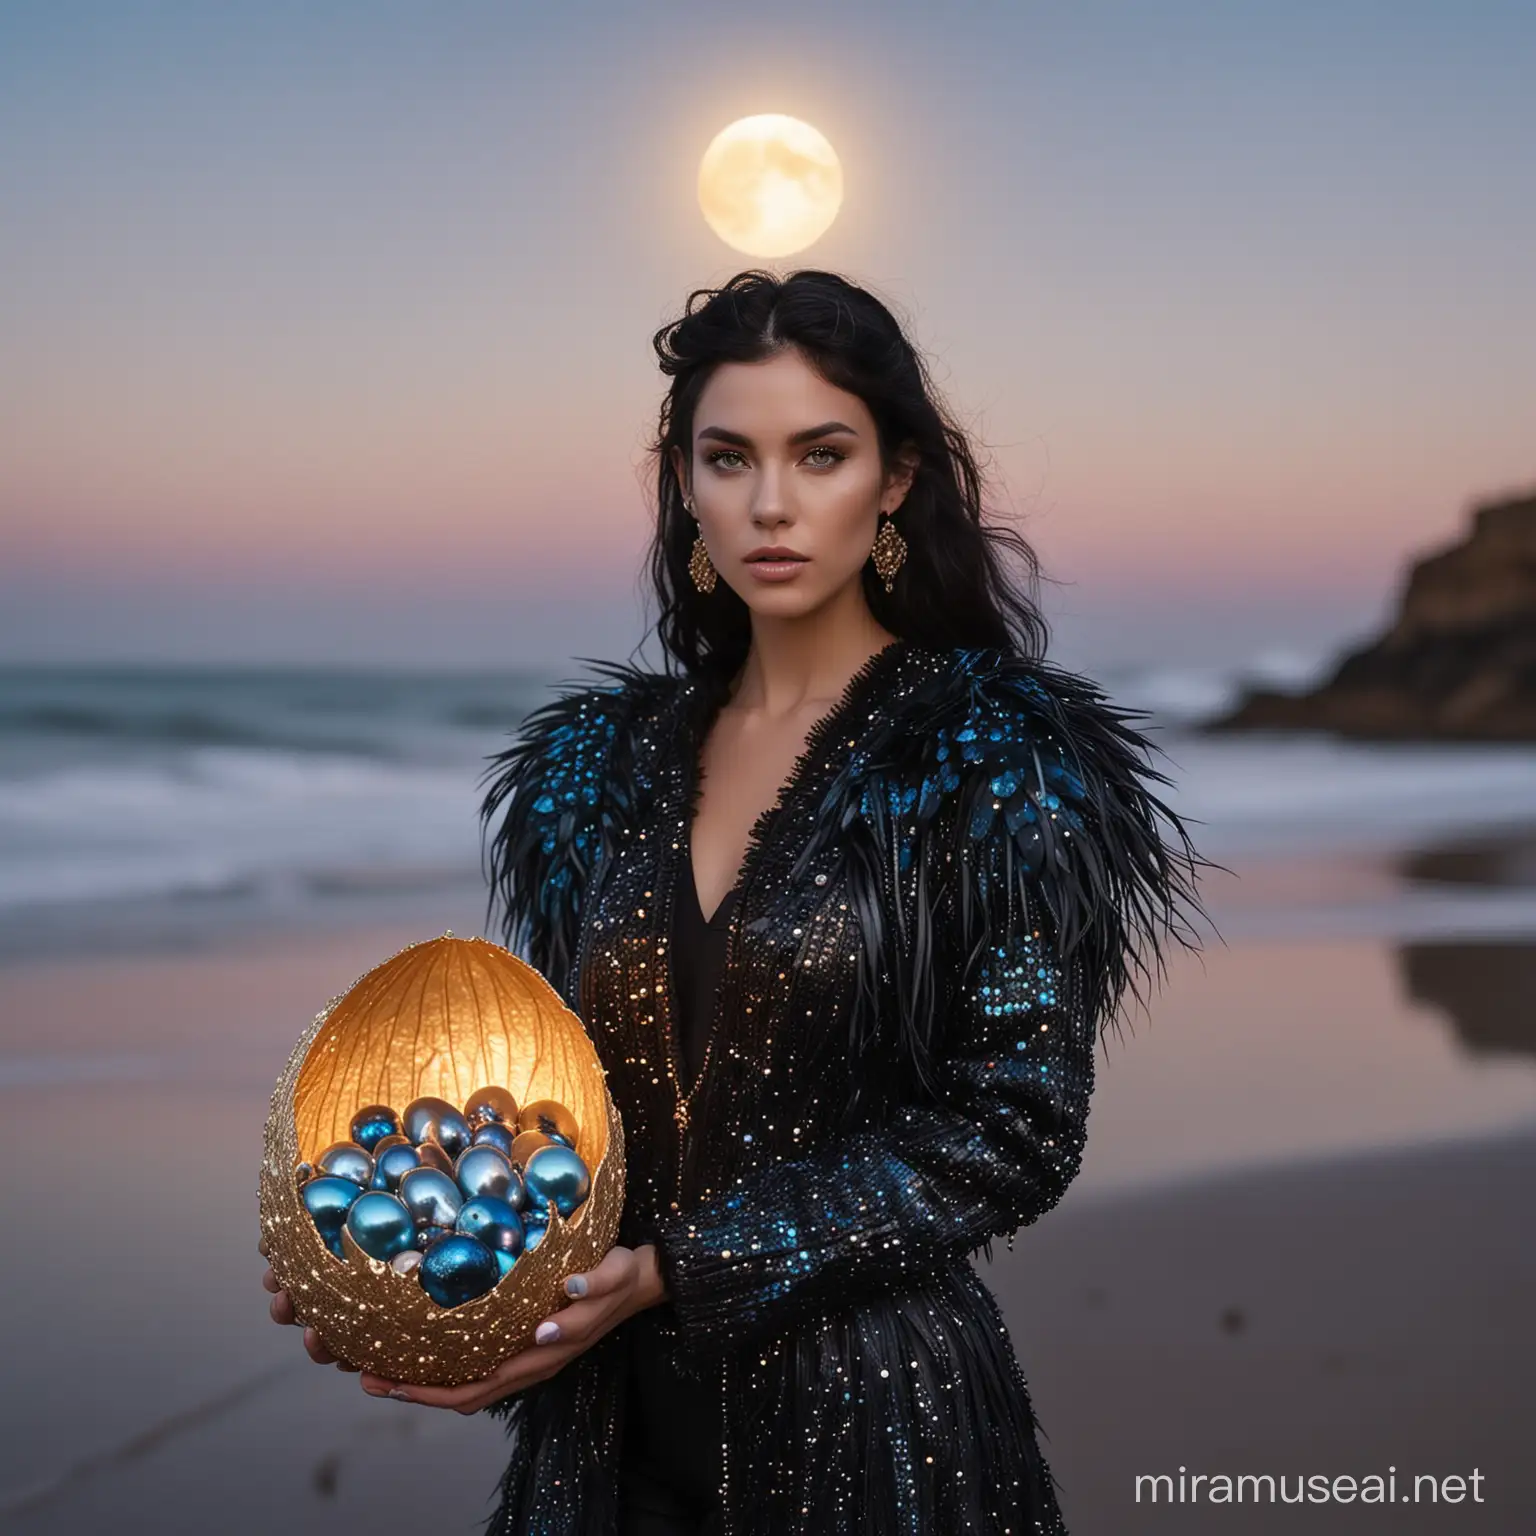 Ethereal Model with Metallic Dragon in Golden Eggshell on Moonlit Beach